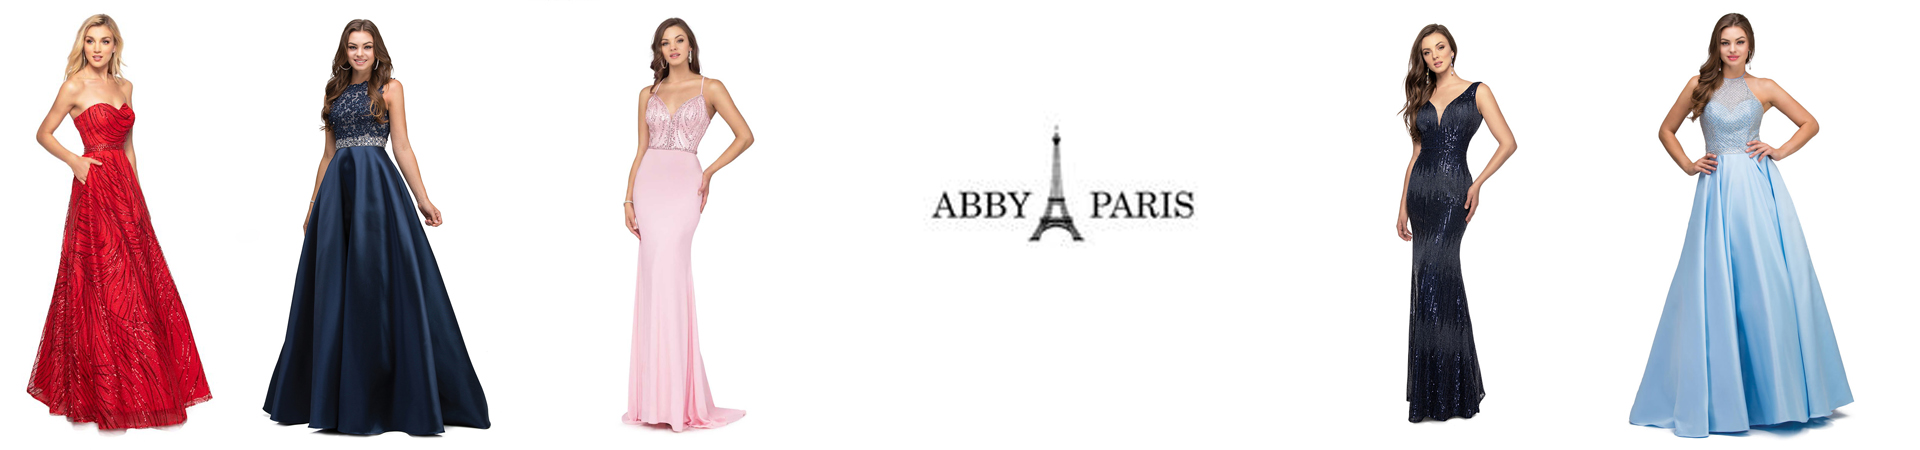 ABBY PARIS